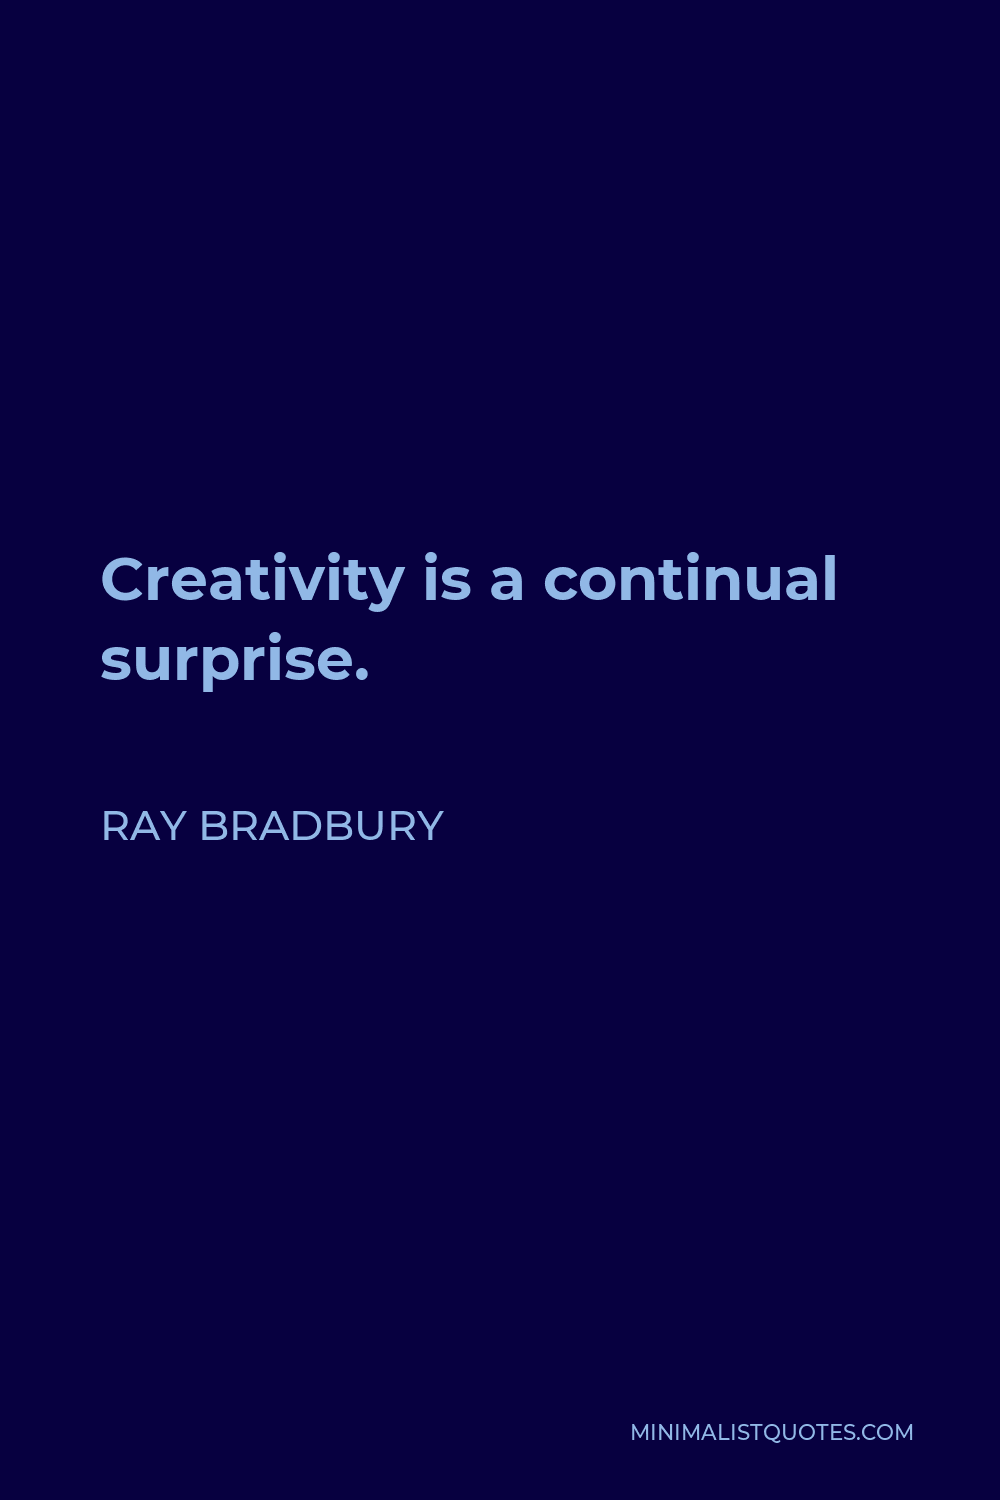 Ray Bradbury Quote - Creativity is a continual surprise.